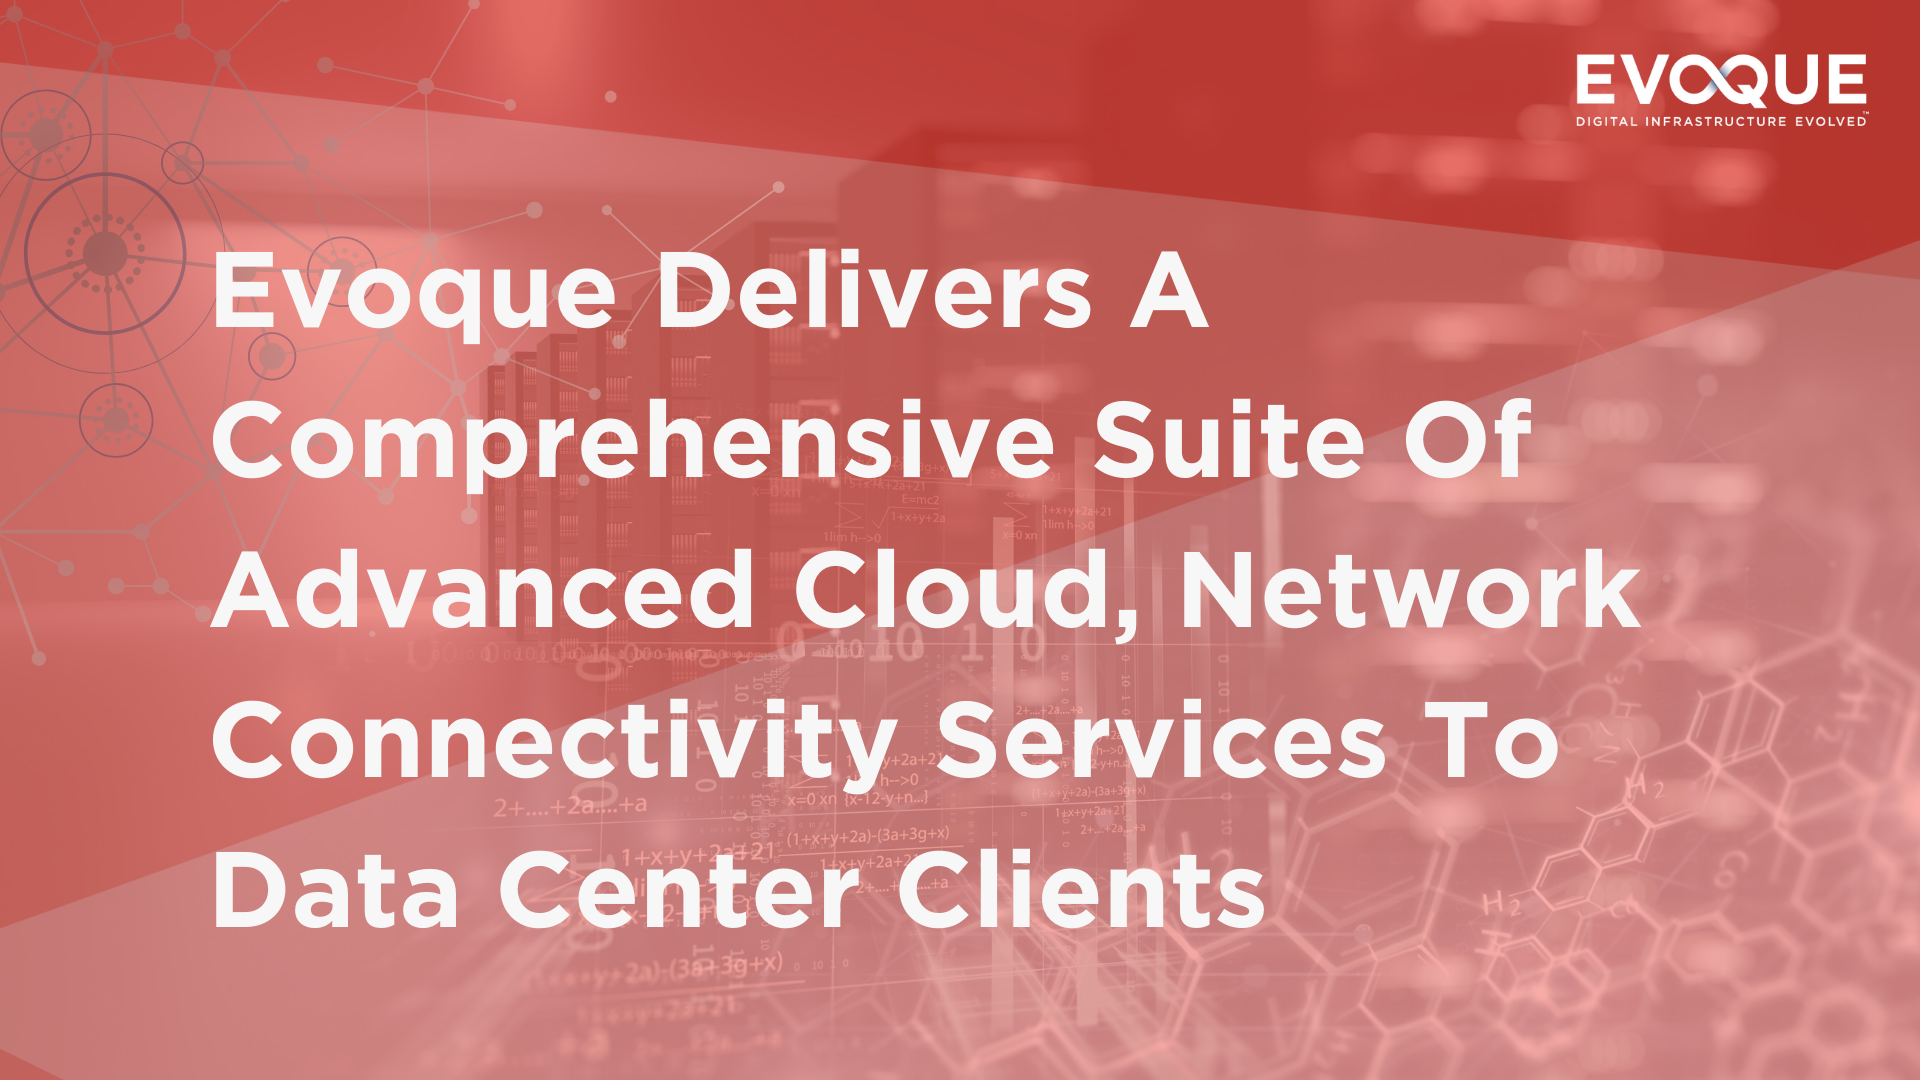 Evoque Delivers A Comprehensive Suite Of Advanced Cloud, Network Connectivity Services To Data Center Clients